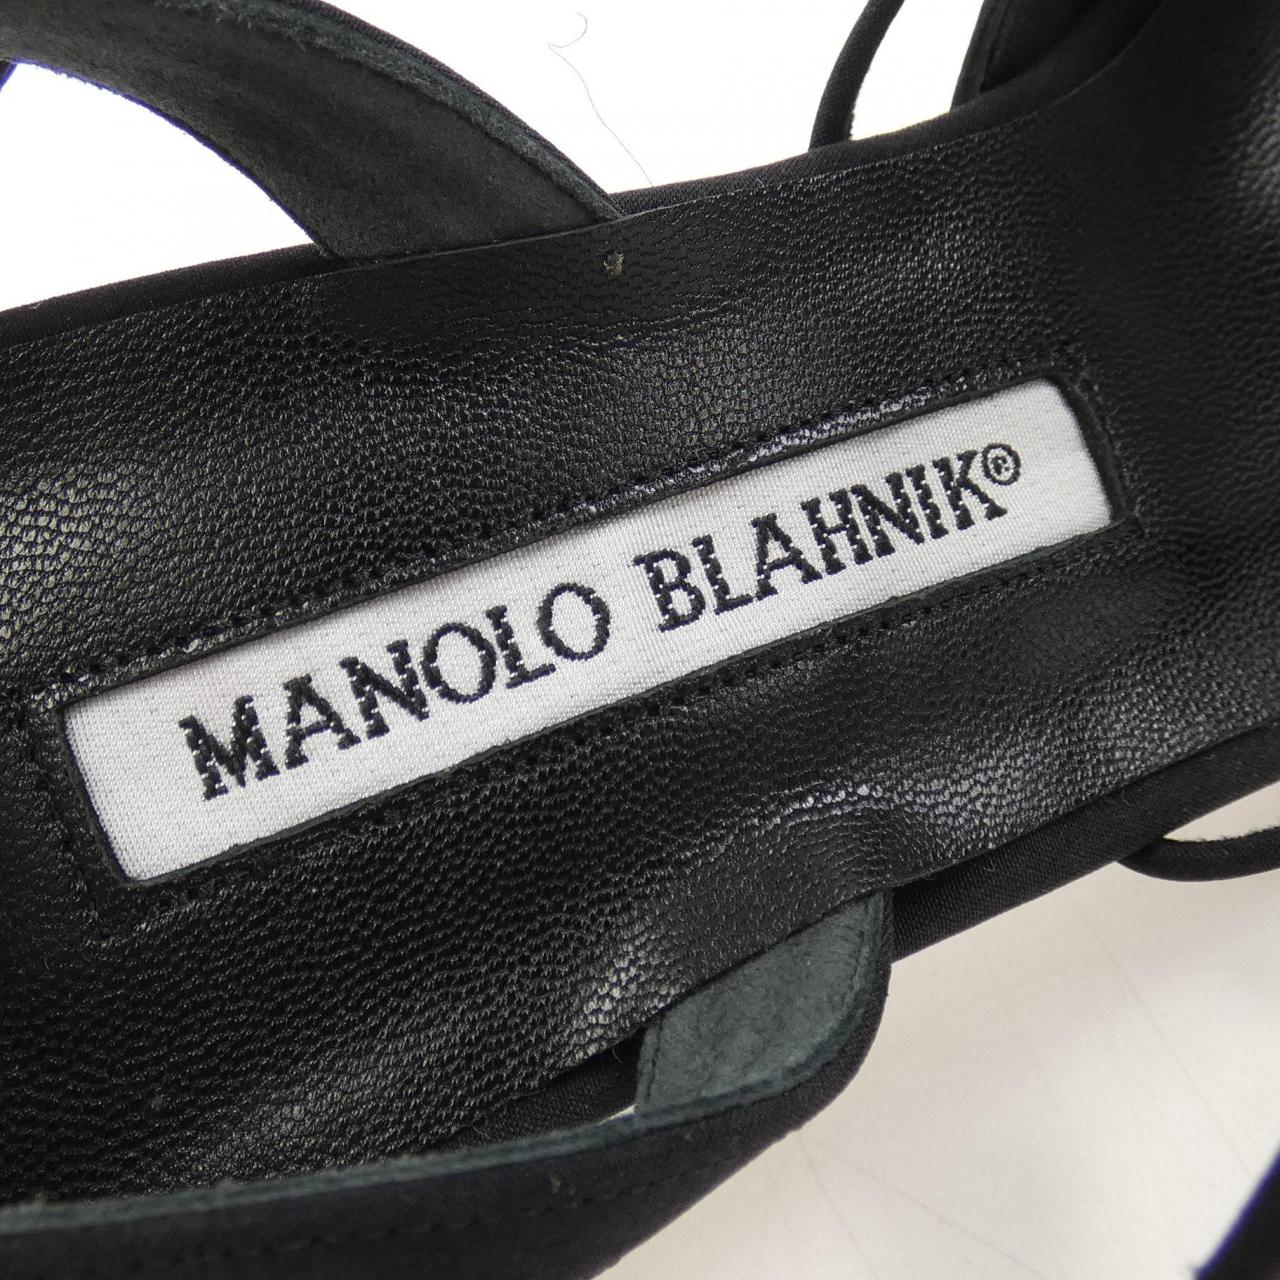 MANOLO BLAHNIK BLAHNIK sandals